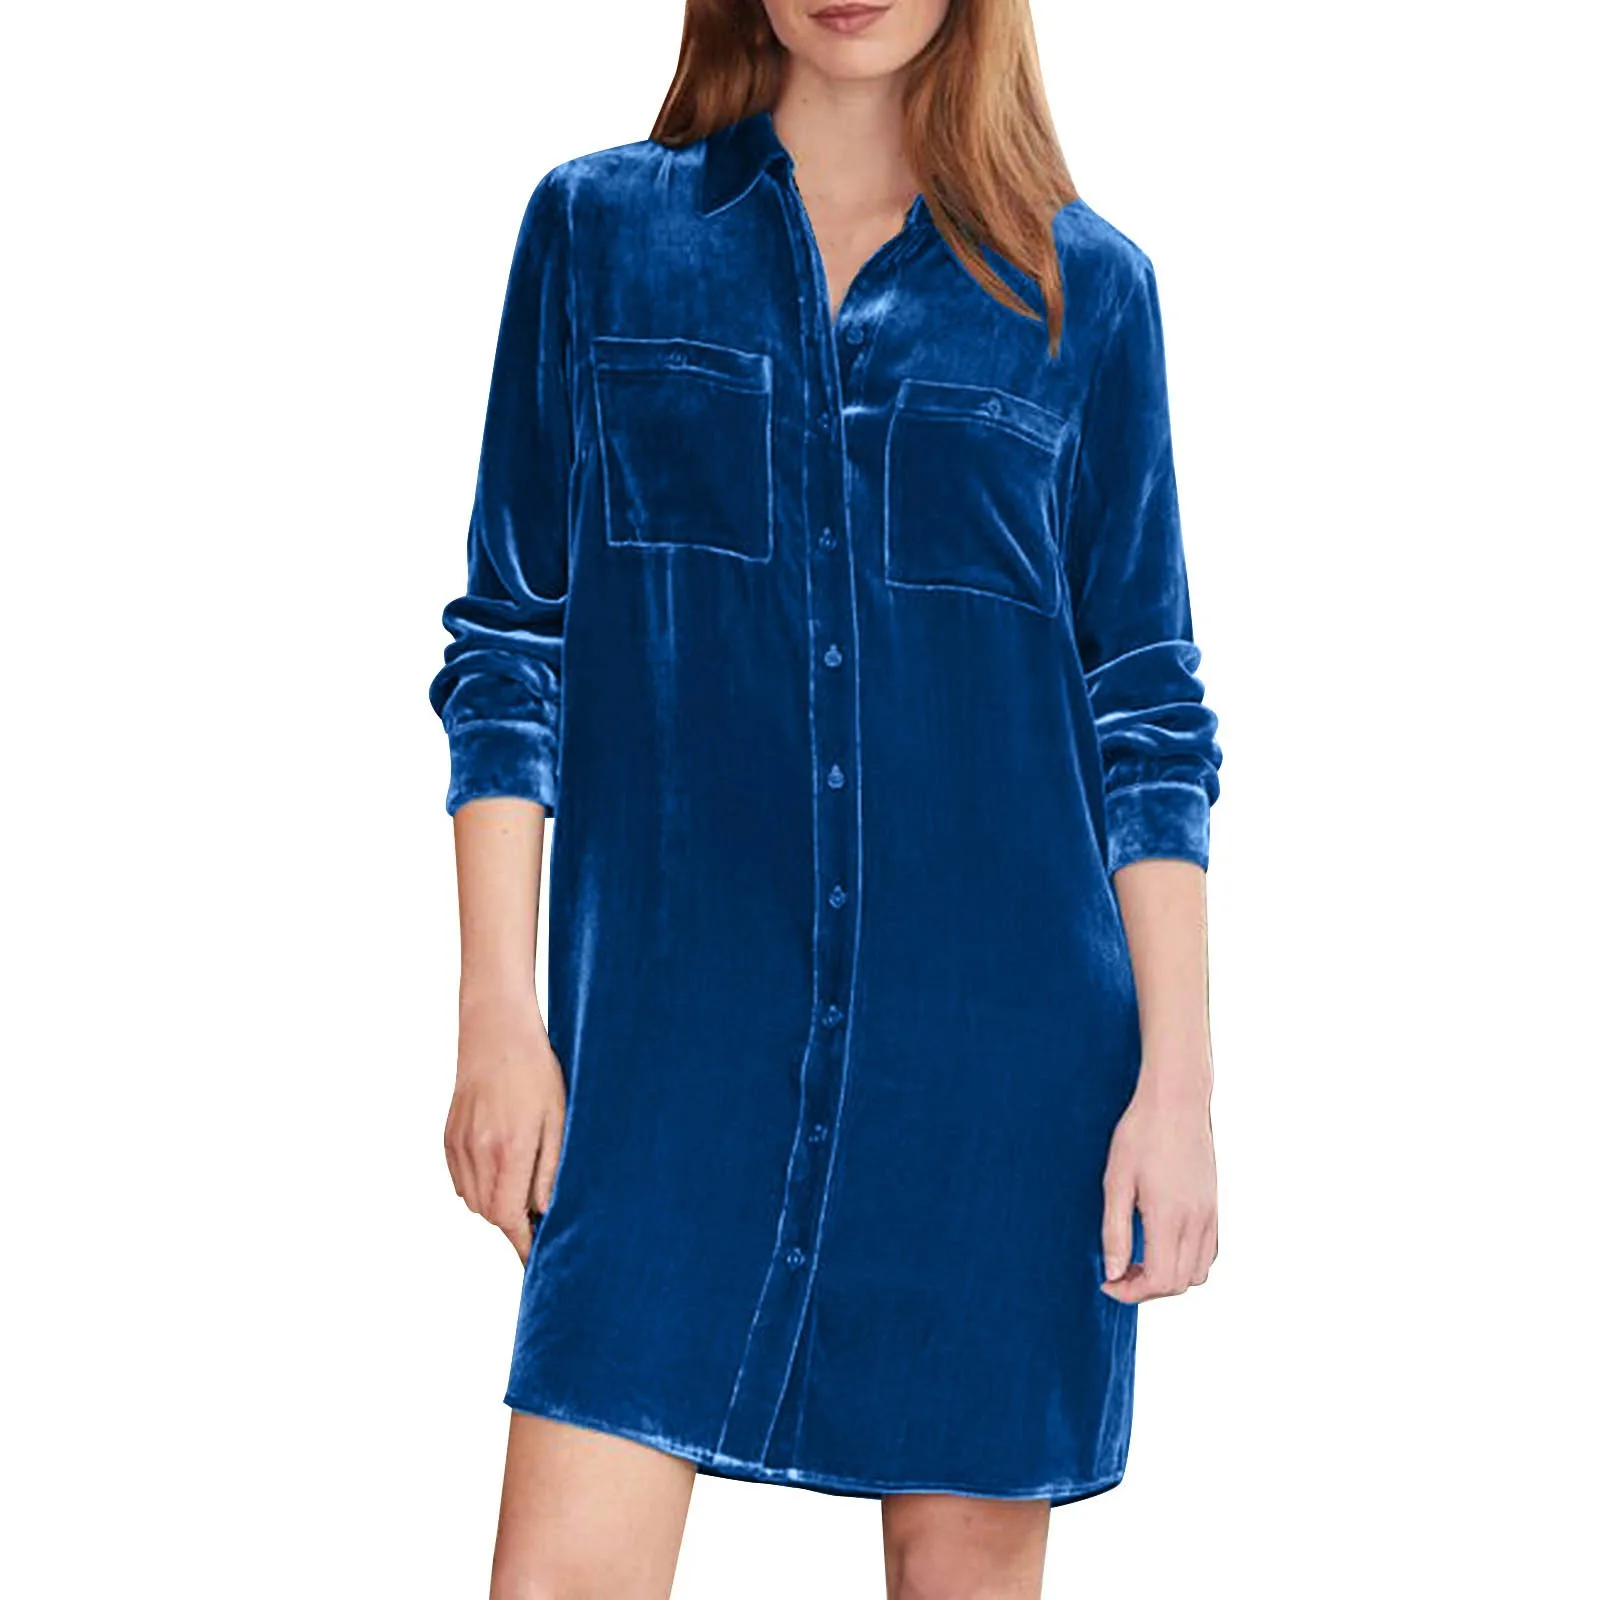 Women's Velvet Shirt Dress - Plus-Size Evening Party Dress with Pockets